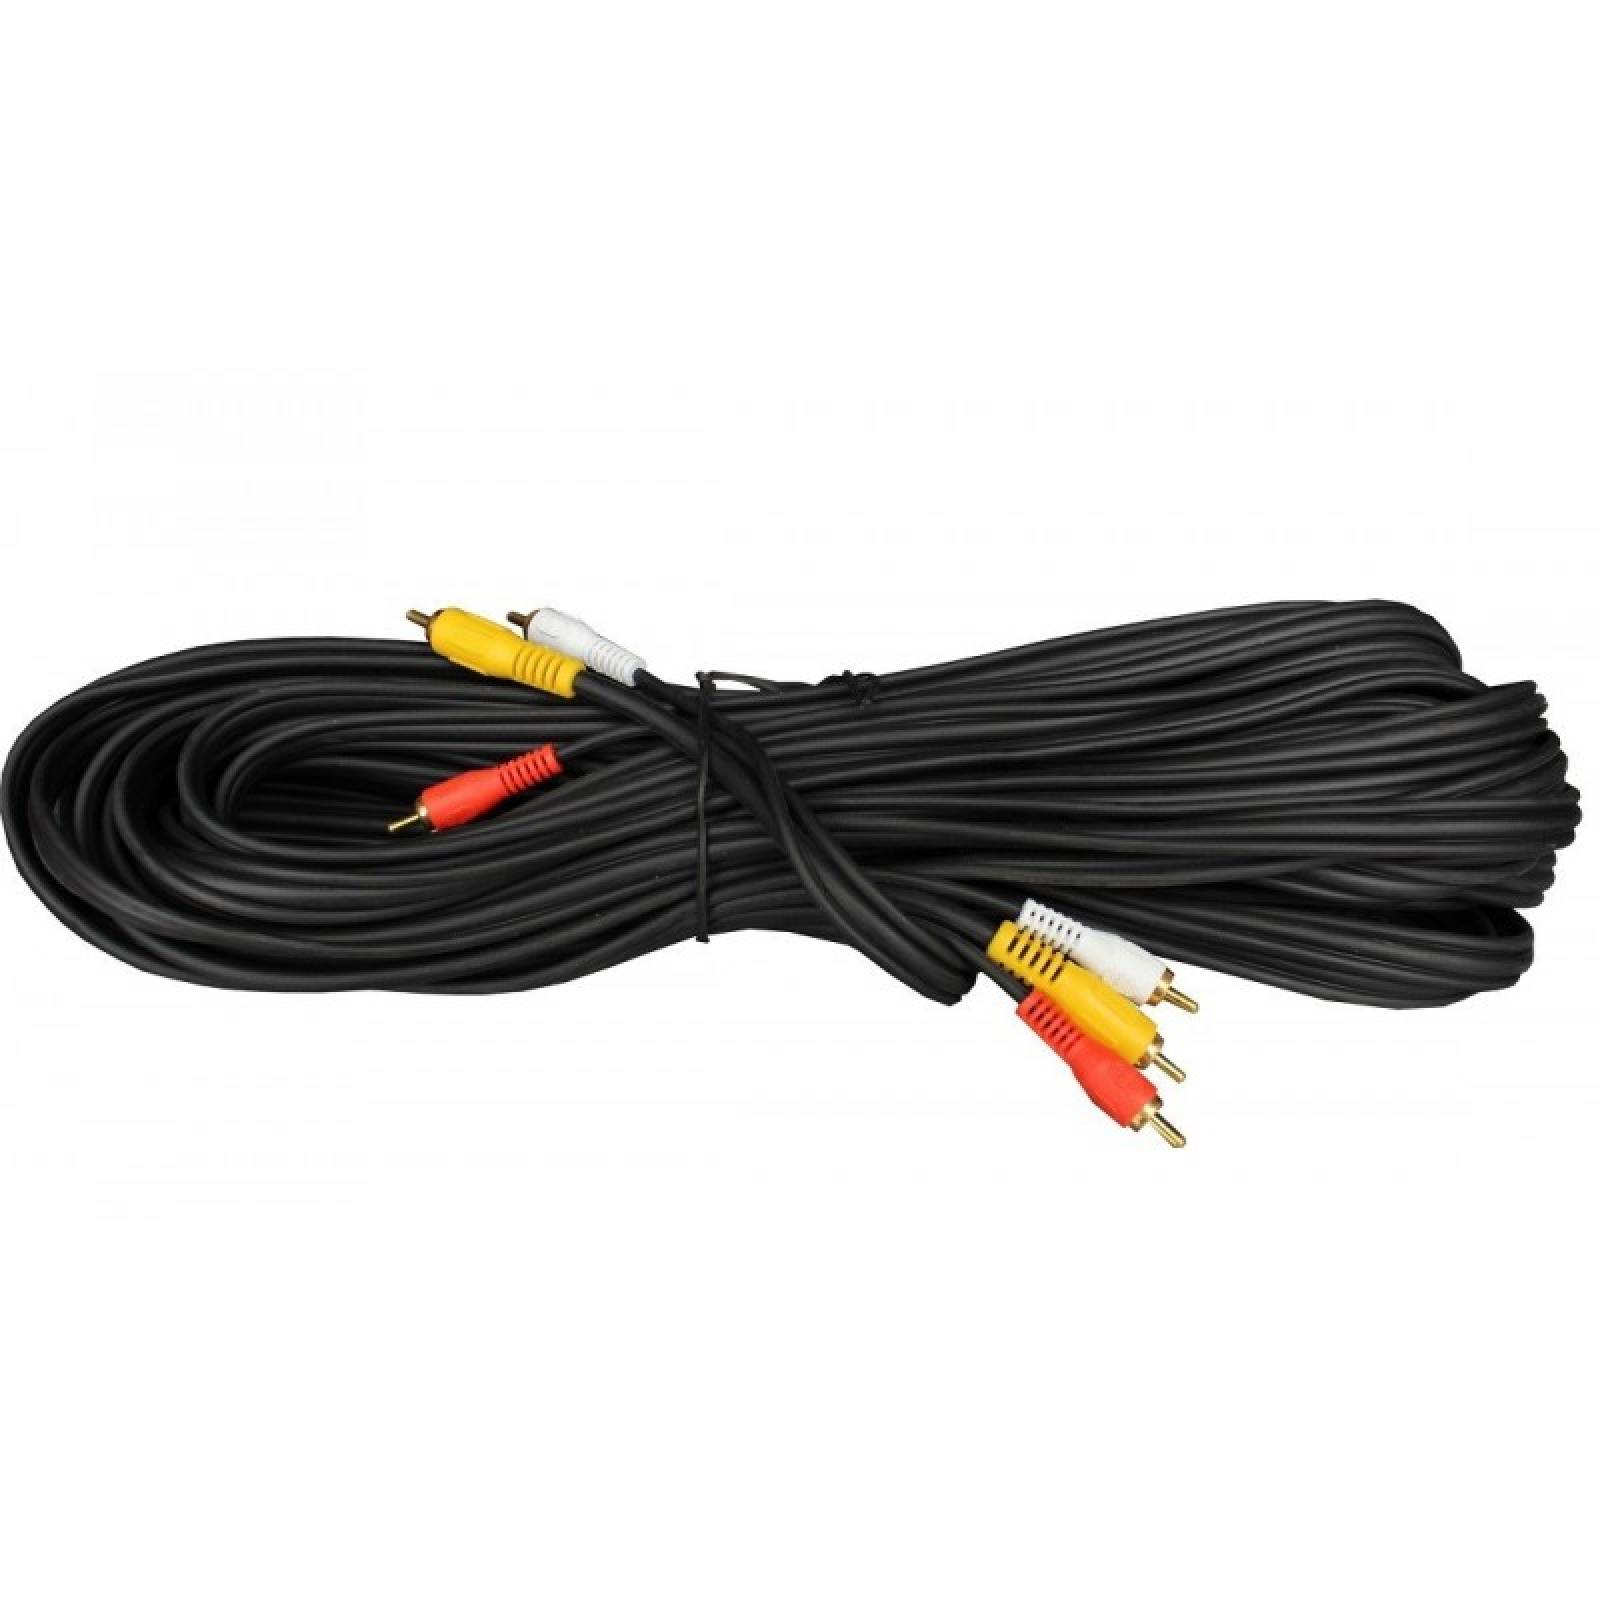 Cable Rca 3 Plug Macho A Macho Audio Y Video 15m 